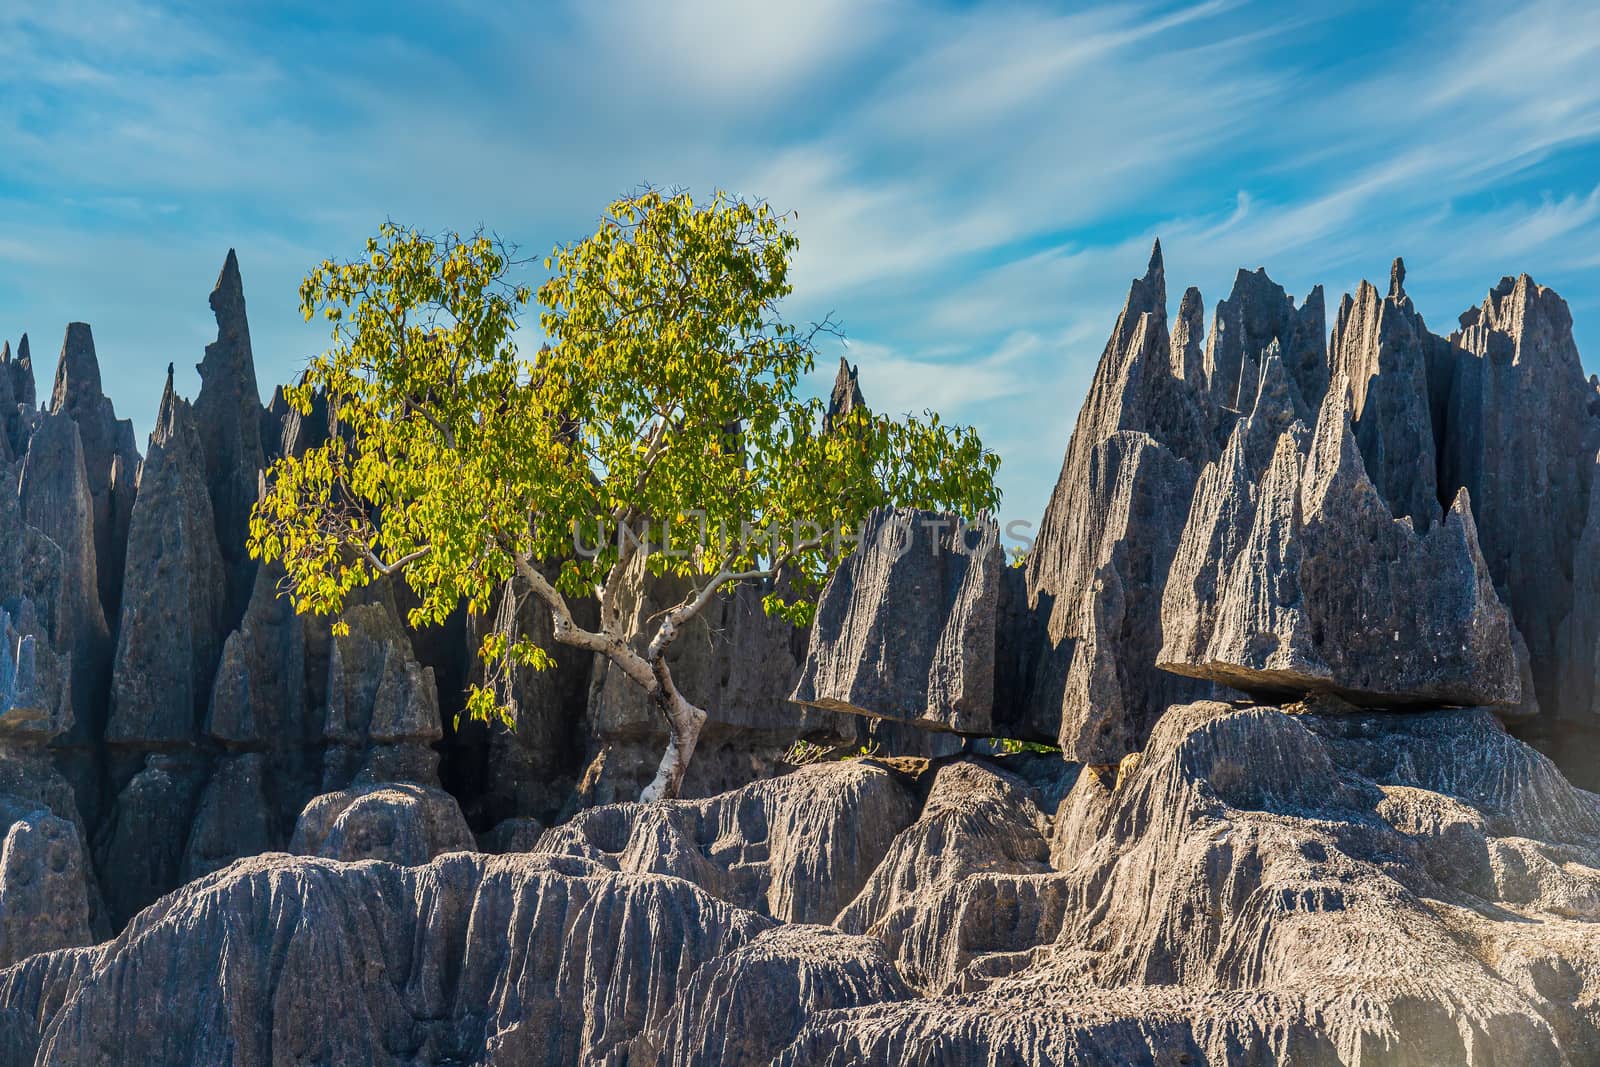 Grey Tsingy Peaks in Bemaraha National Park, Madagascar by COffe